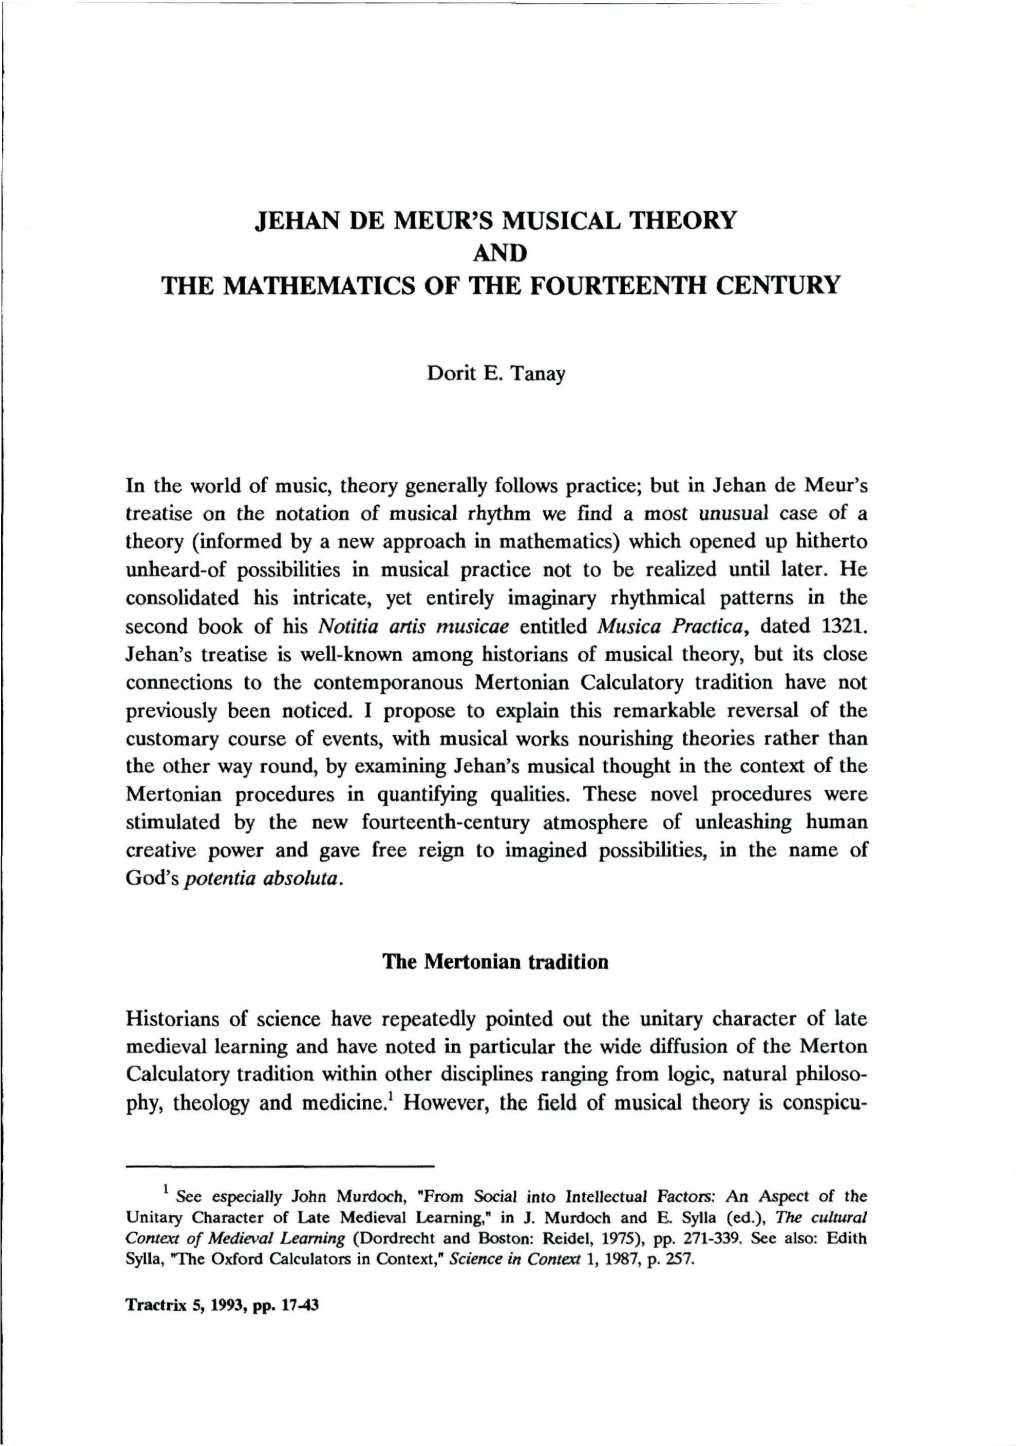 The Mathematics of the Fourteenth Century